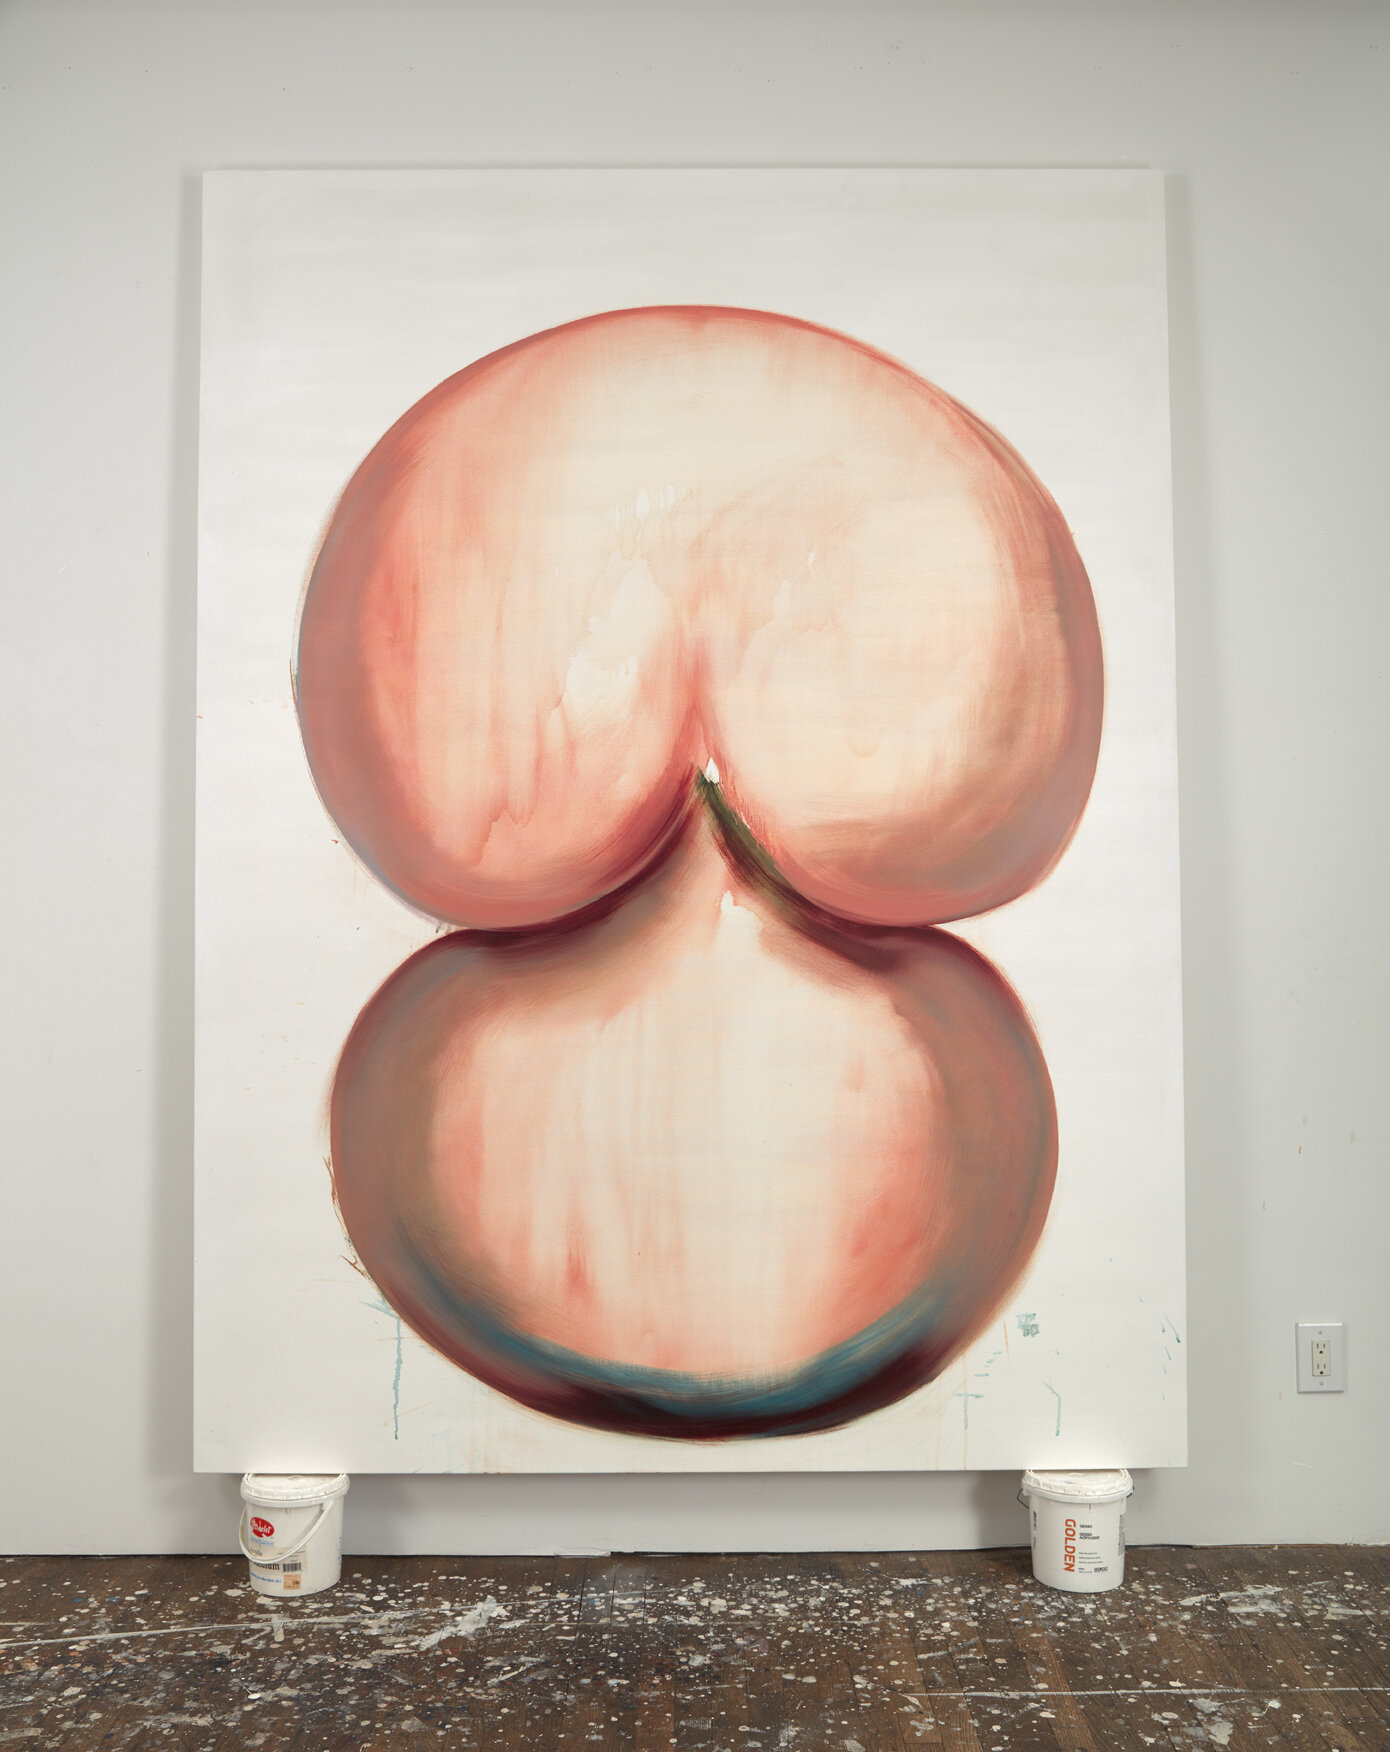 Venus Figure, Fertility Symbol, 2019, oil on canvas, 96 x 72"